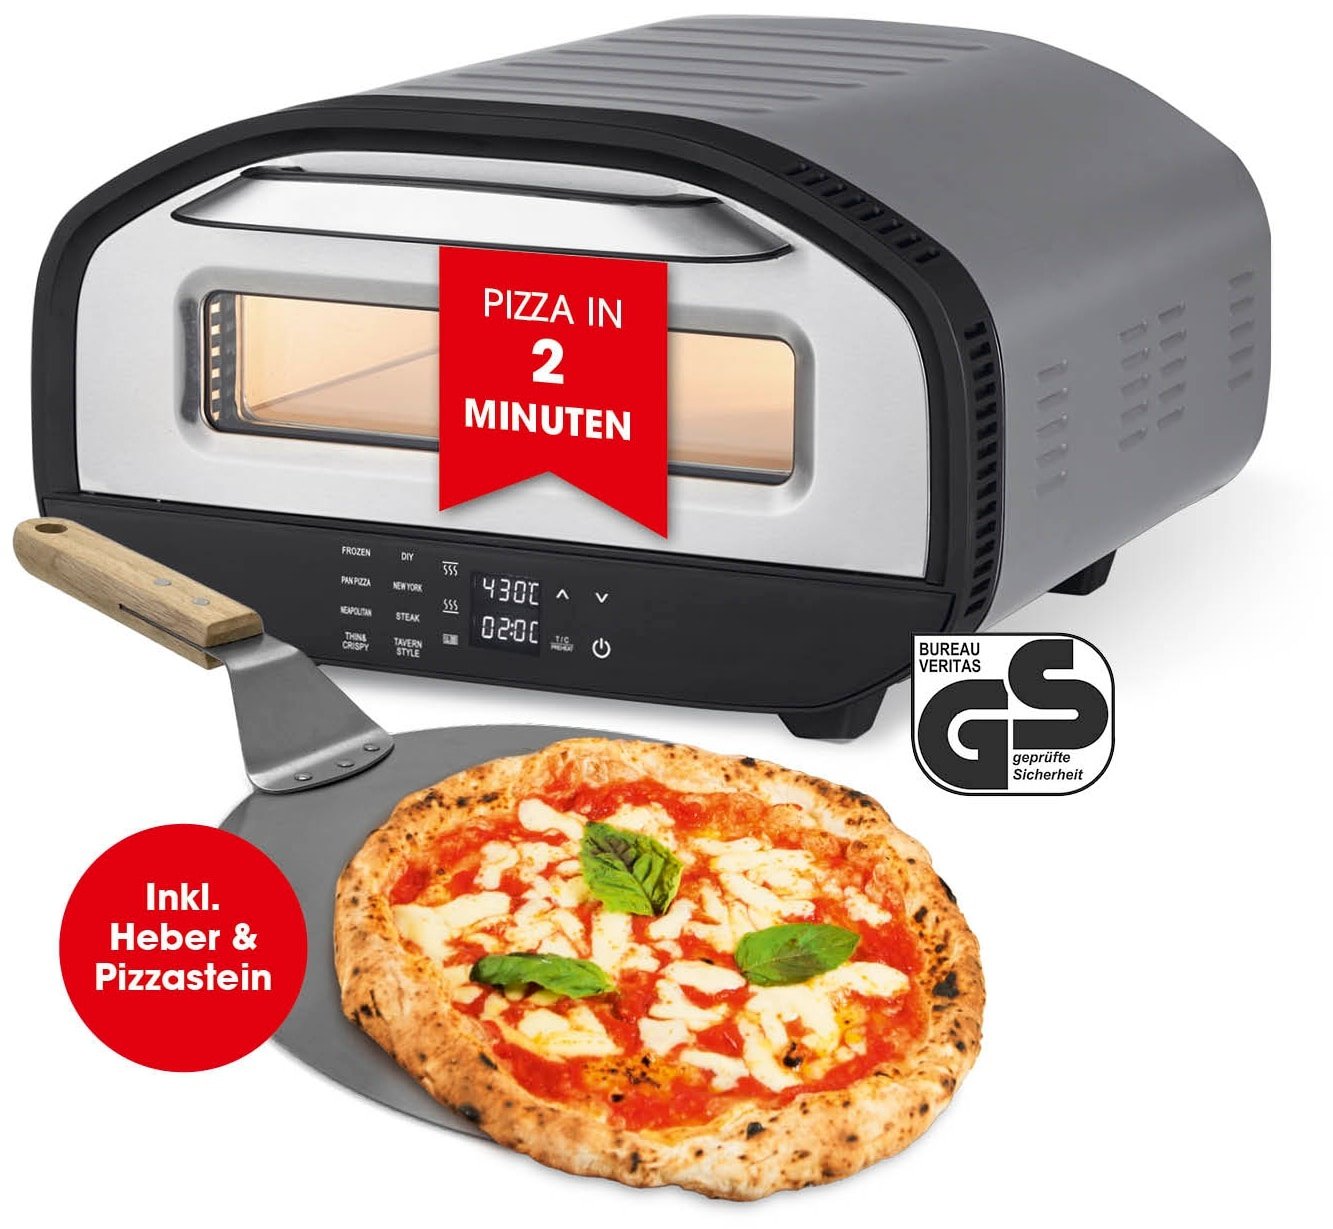 GOURMETmaxx Elektro-Pizzaofen 1700W